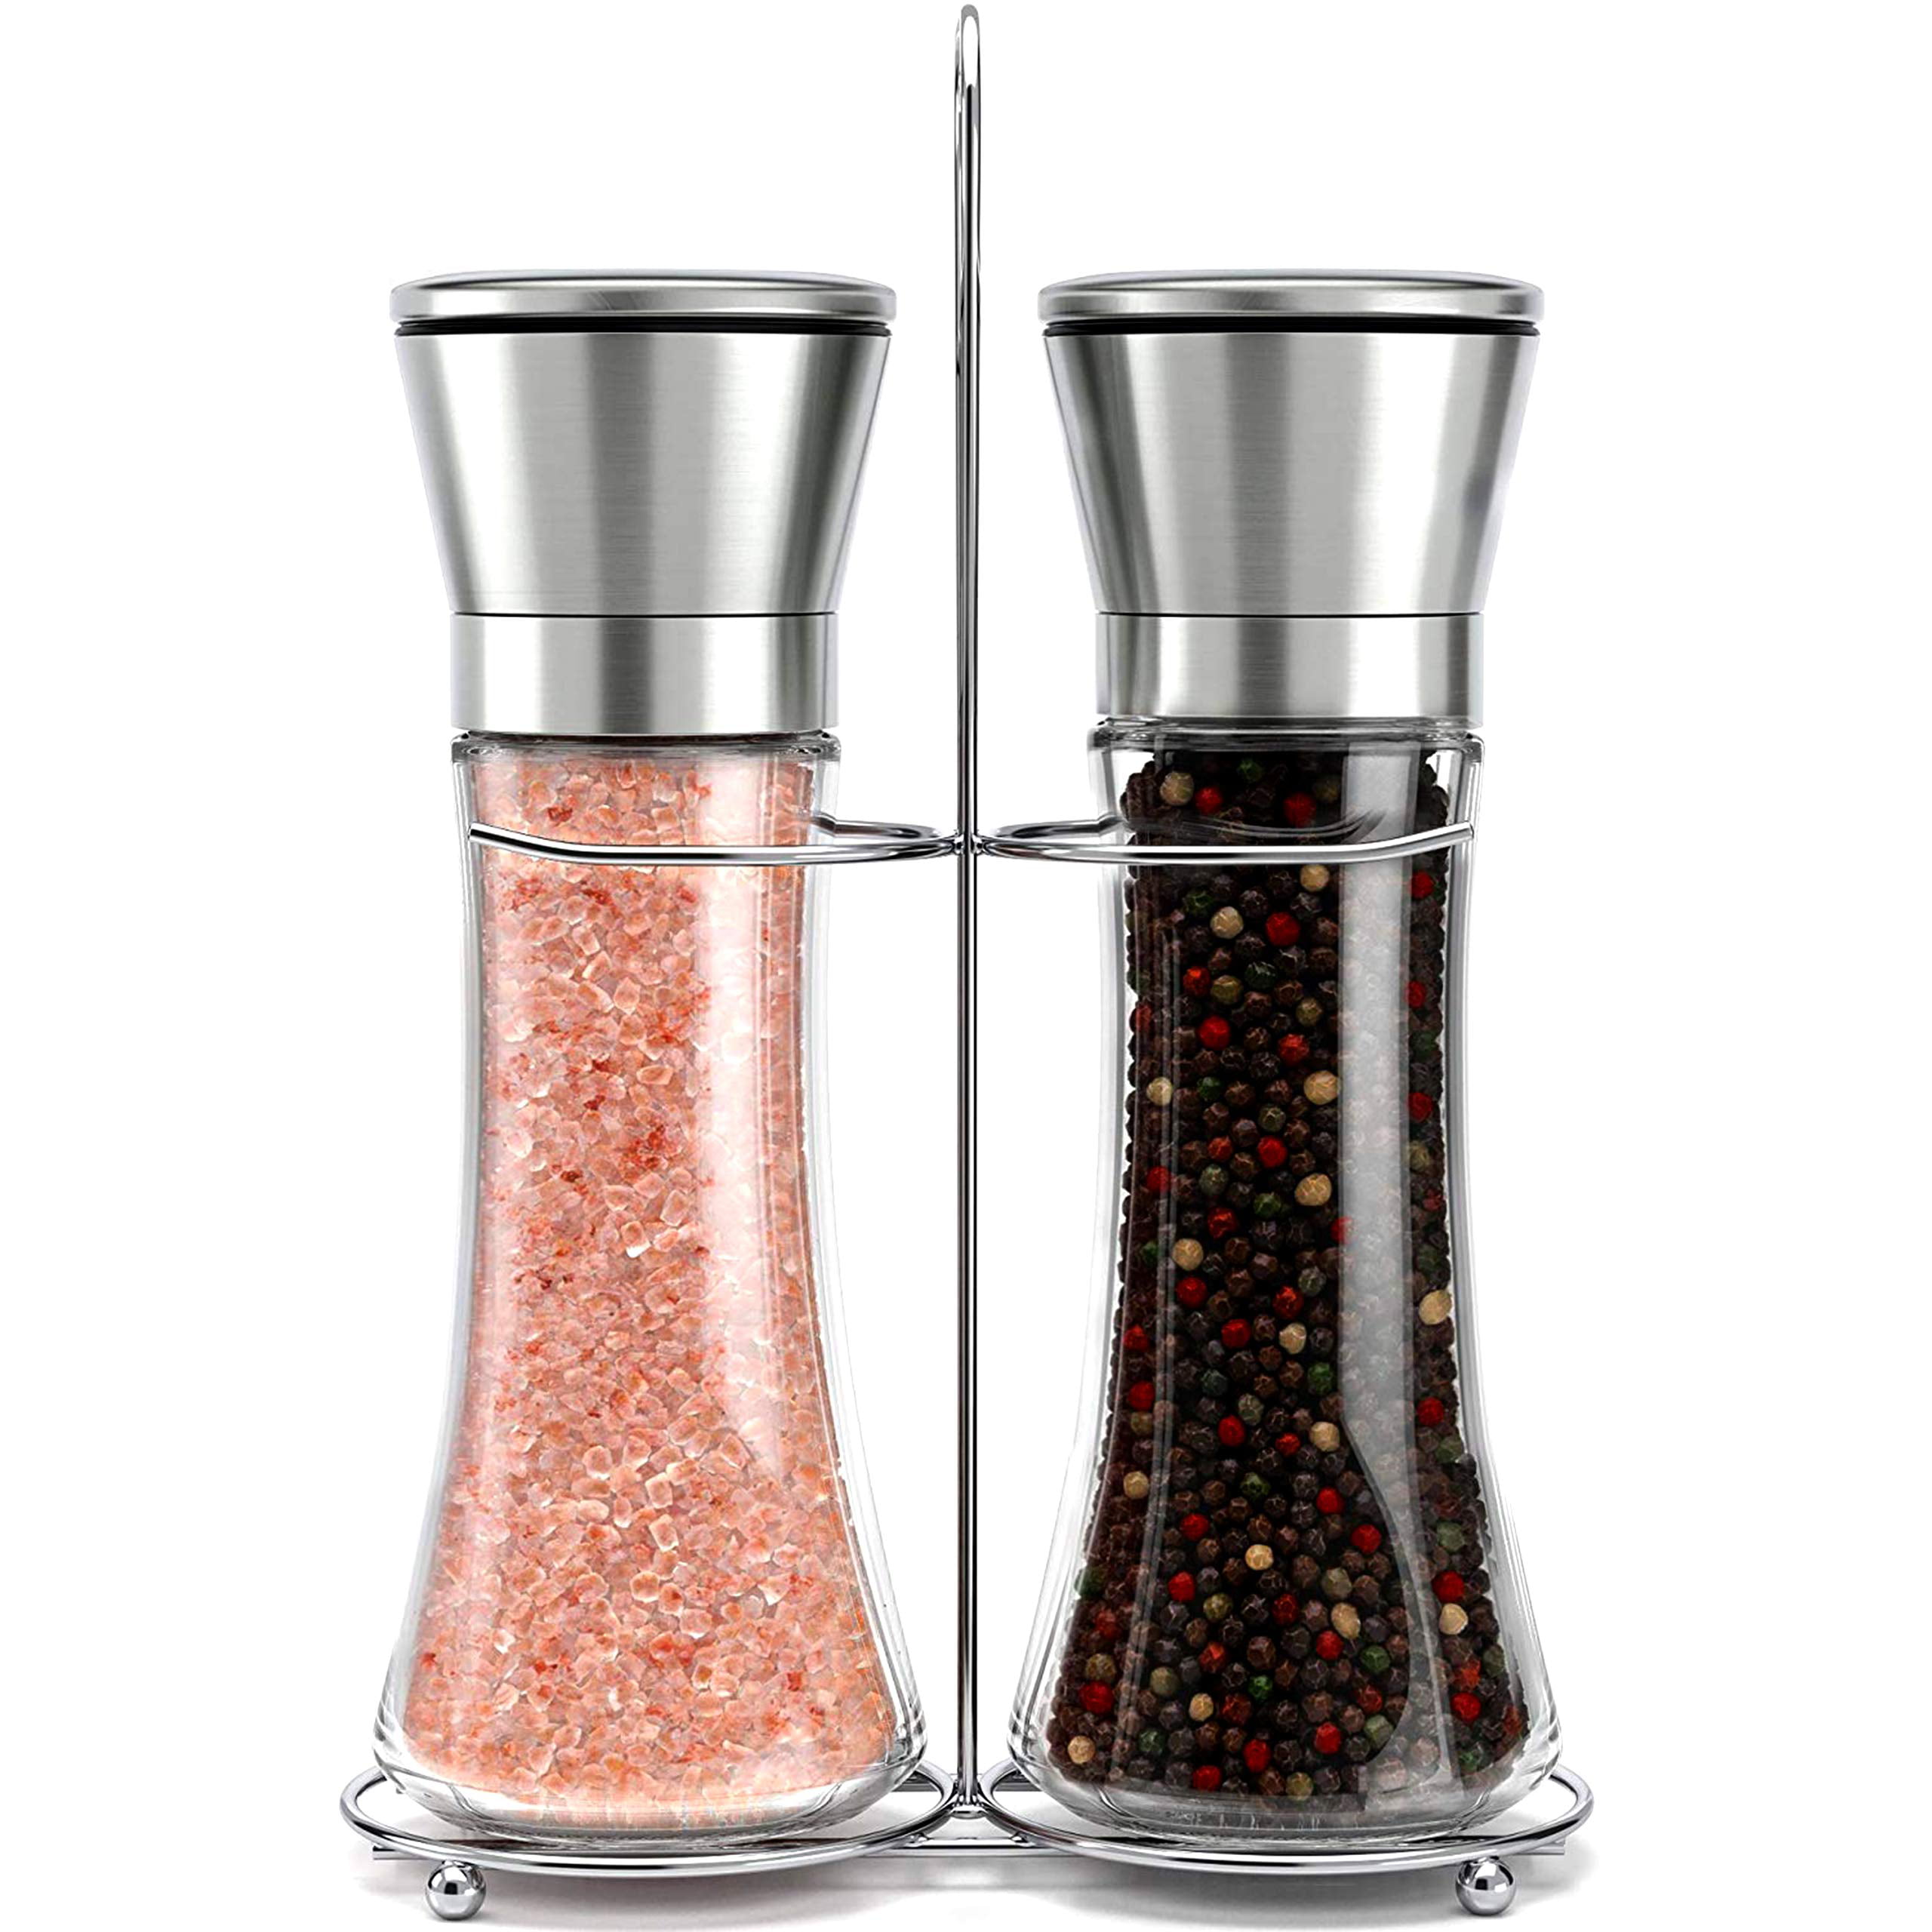 2 Pack of Glass Pepper Mills Shakers with Adjustable Coarseness Short Salt and Pepper Grinders Set